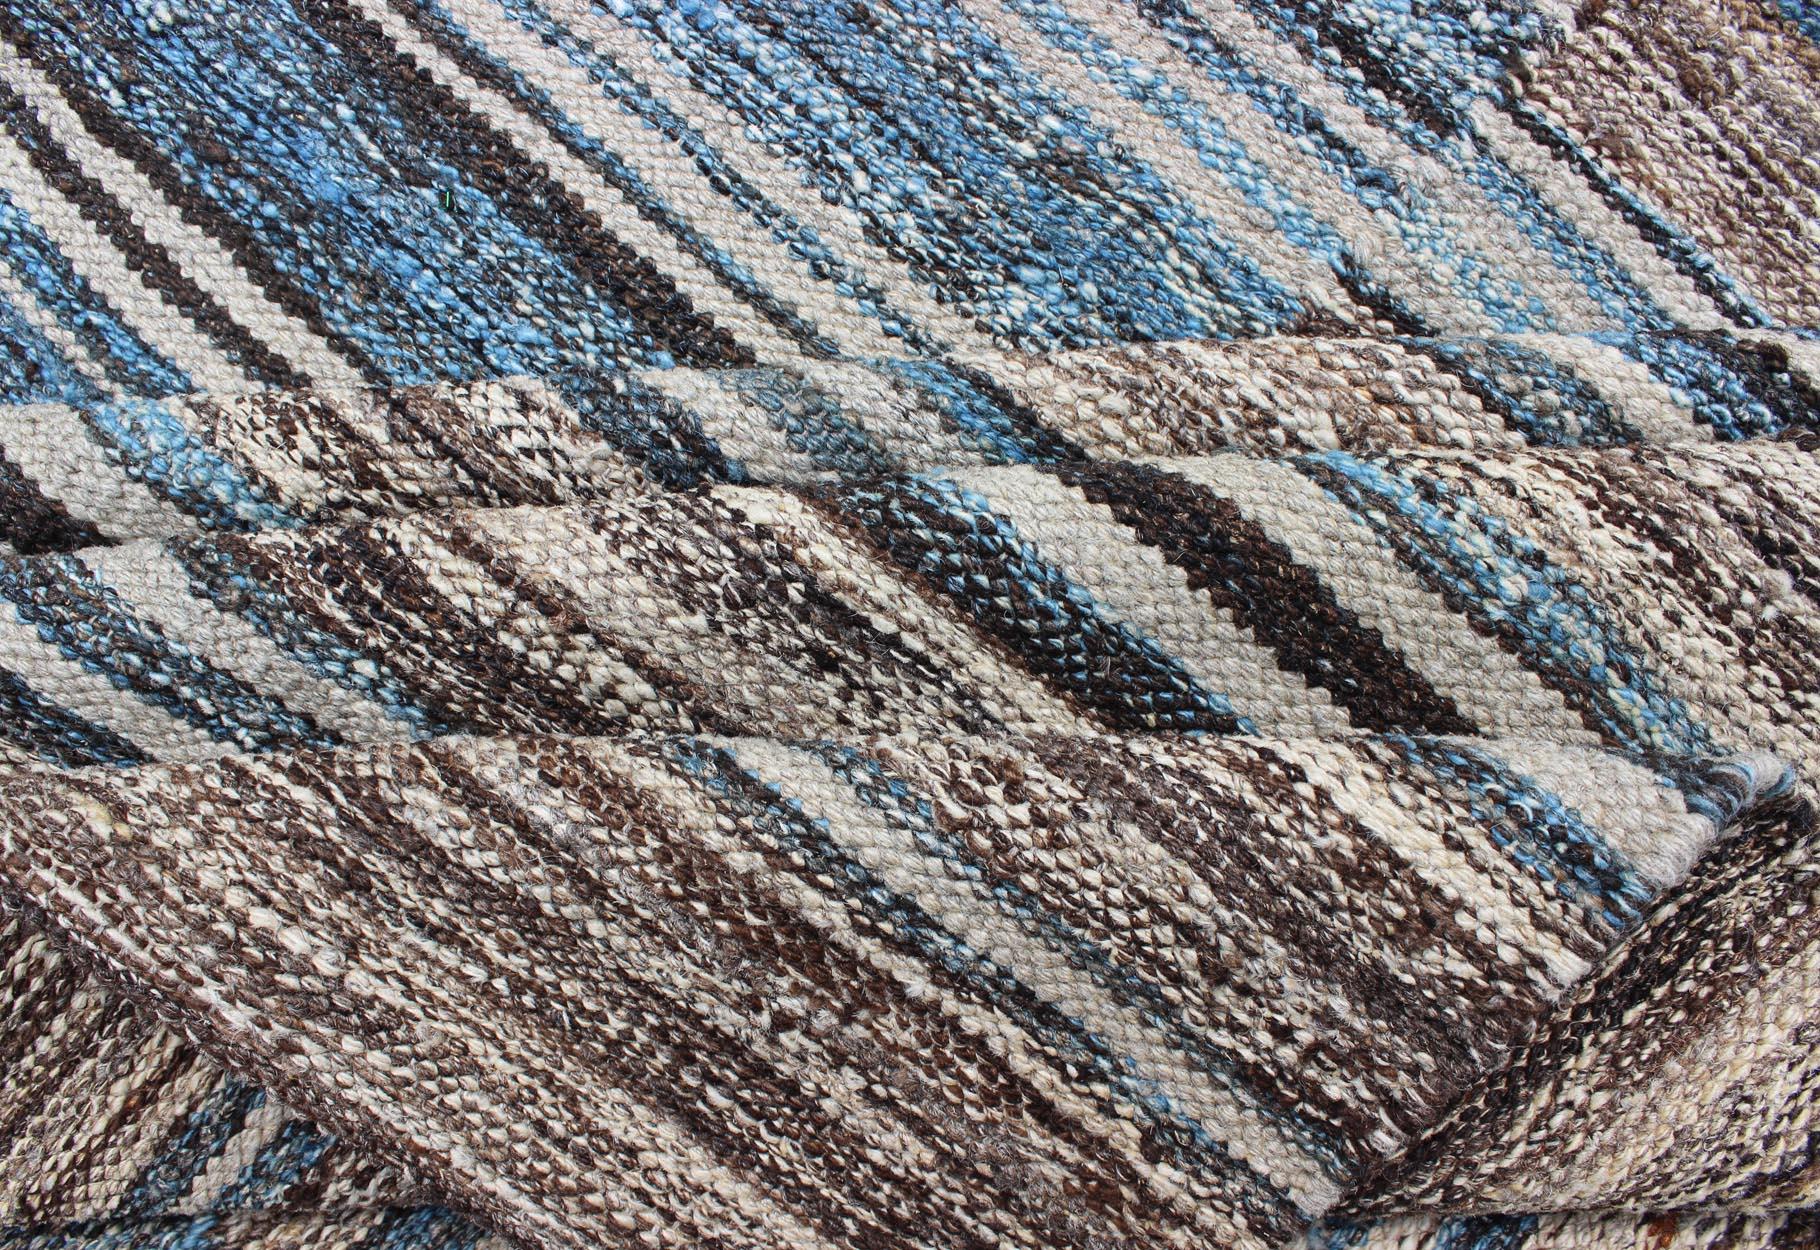 Flat-Weave Kilim Rug with Classic Stripe Design in Blue, Cream, Brown 2